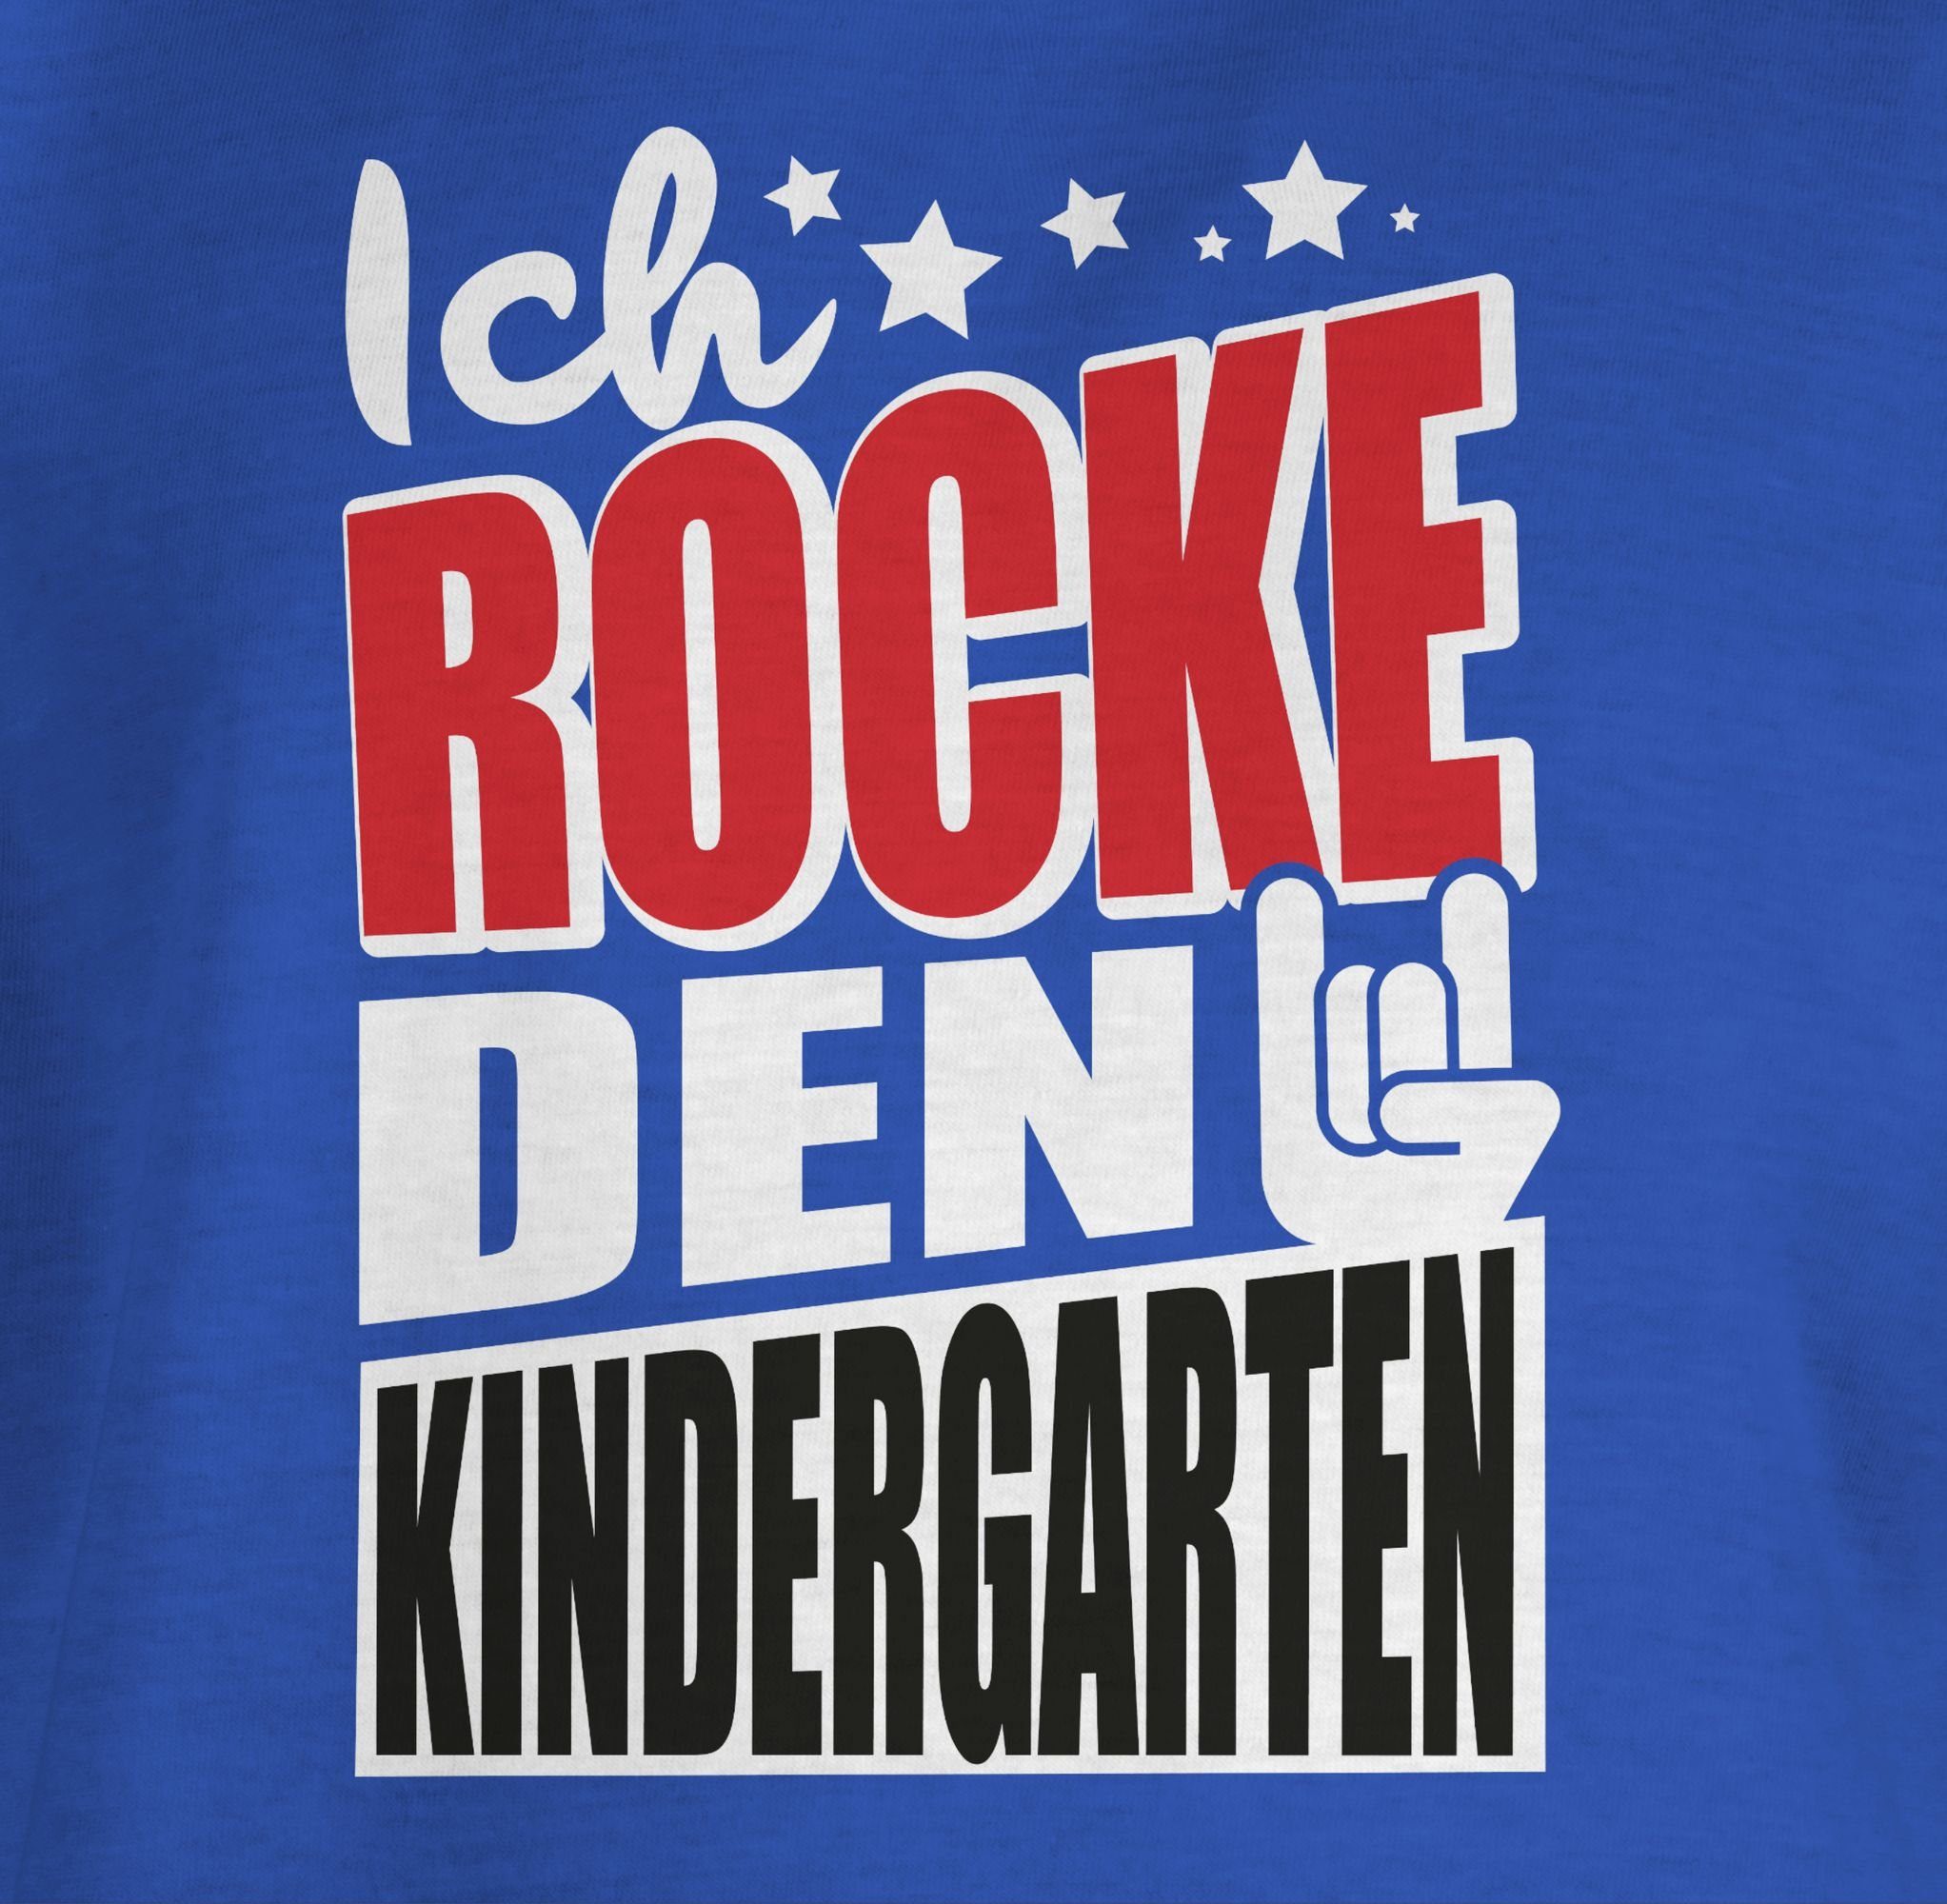 rocke 3 Kindergarten Shirtracer Ich Kindergarten T-Shirt den Royalblau Hallo